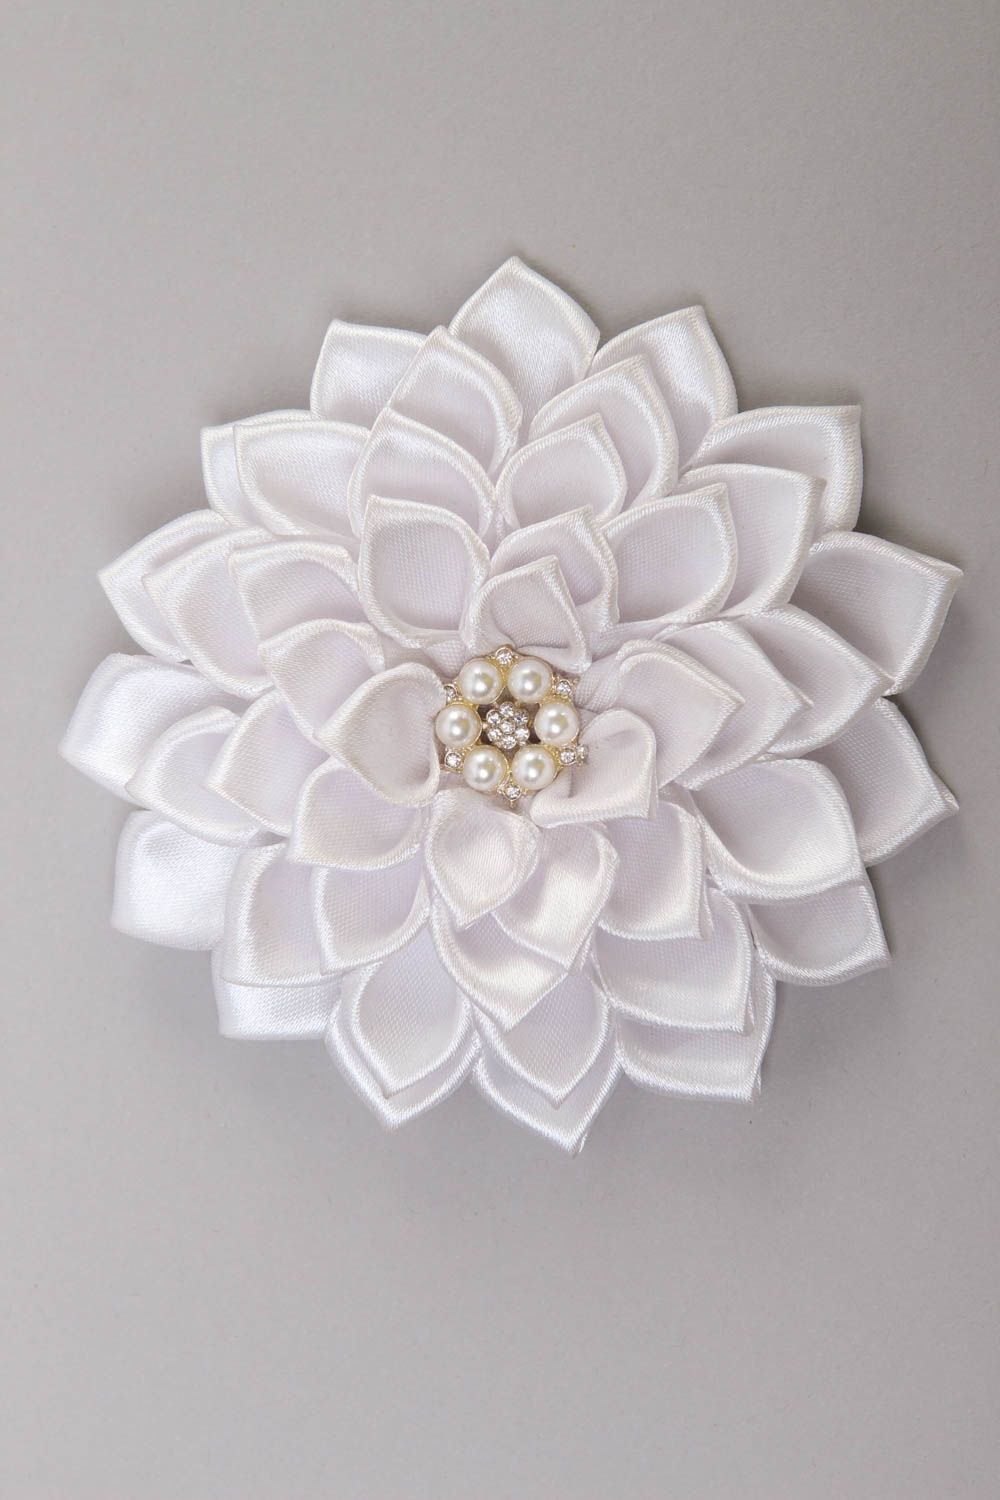 Handmade hair clip kanzashi flowers designer accessories gifts for women photo 2